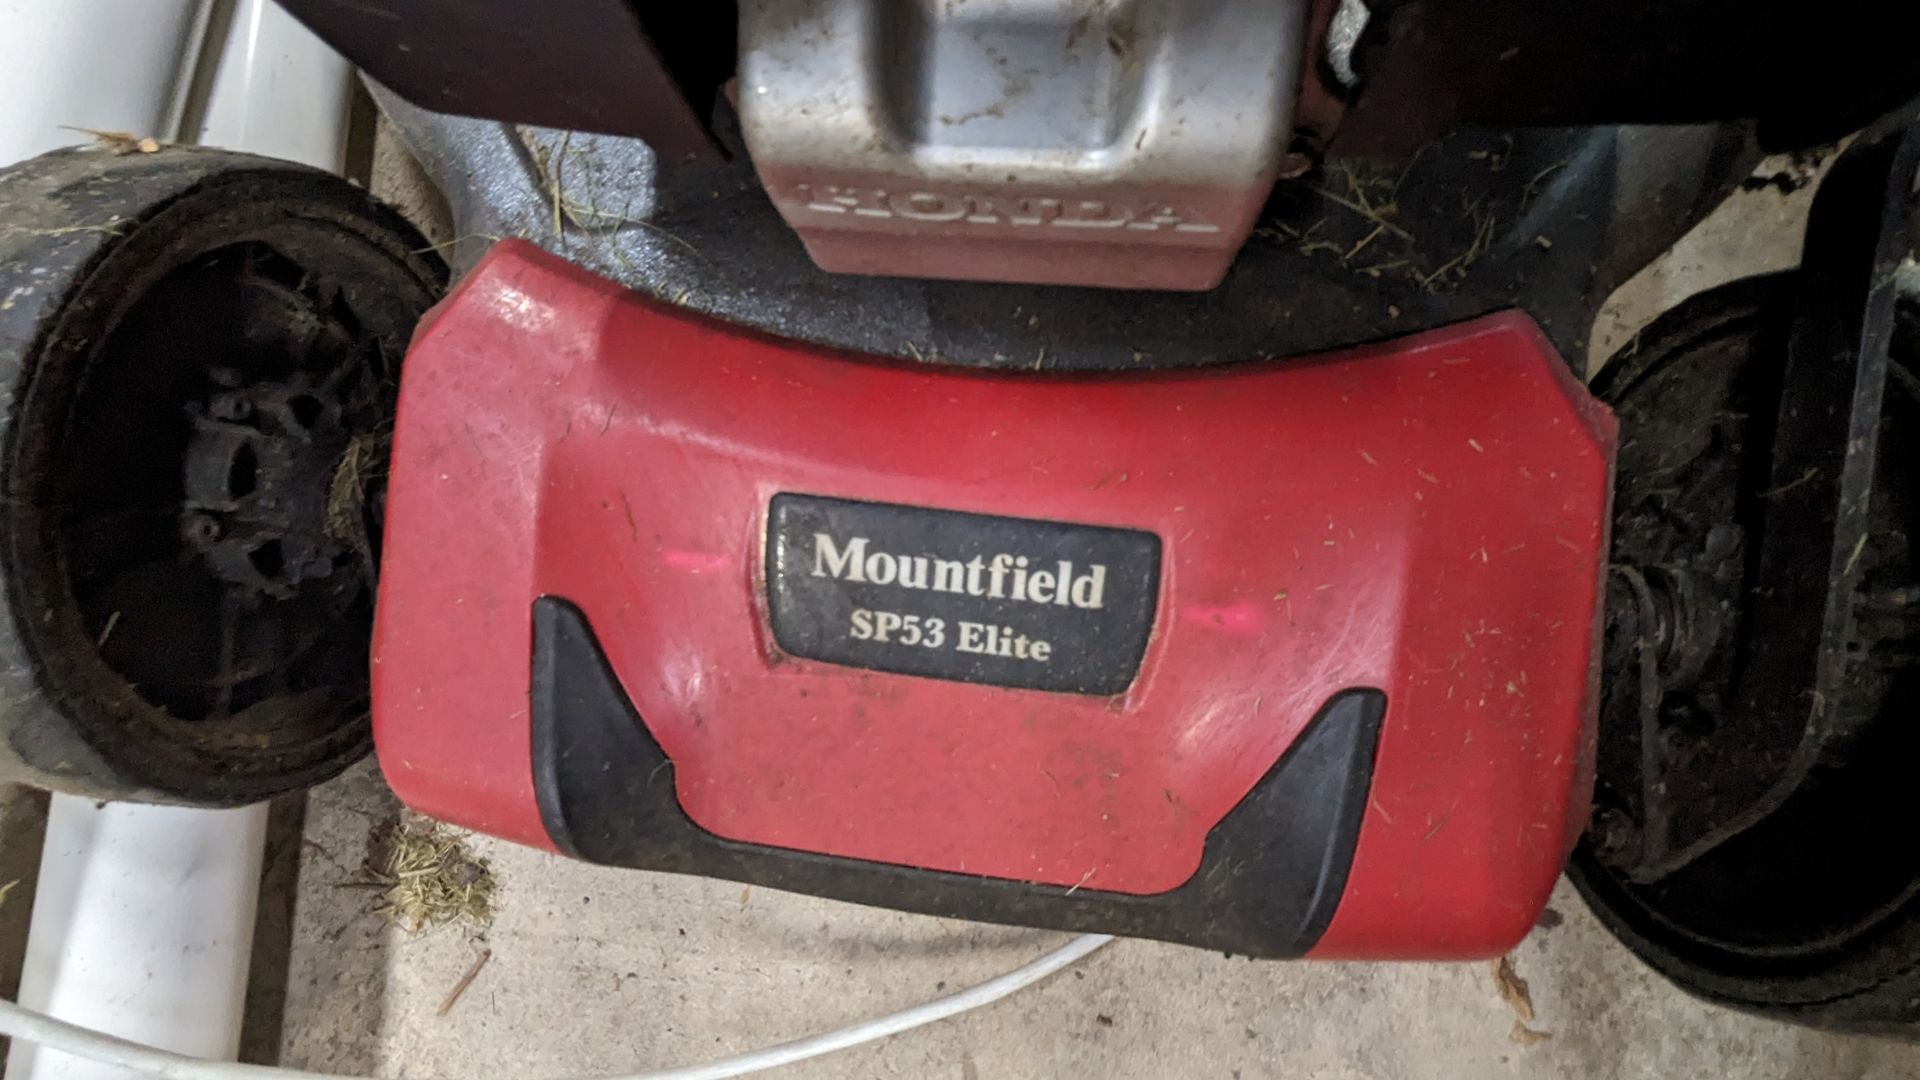 Mountfield, SP53 Elite, Lawnmower - Image 2 of 2